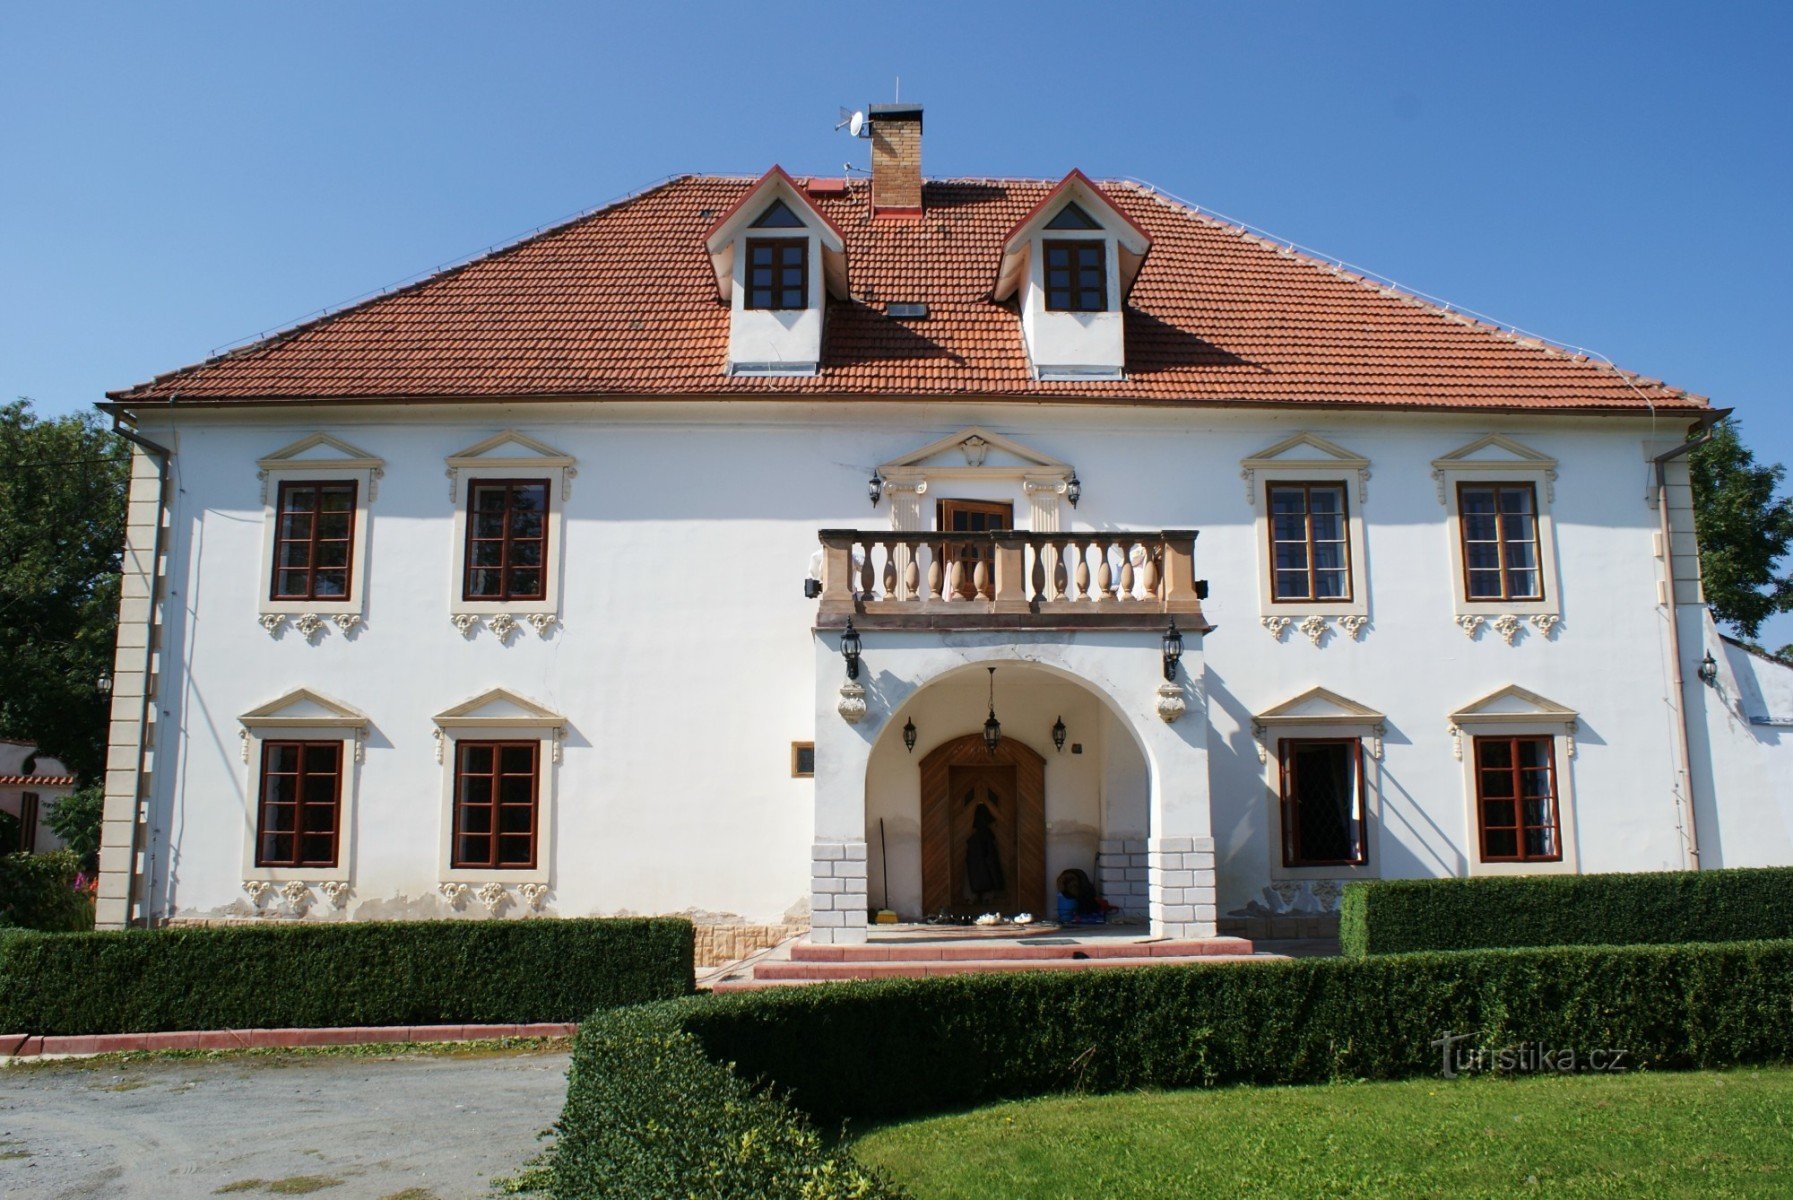 バロック様式の城 - Horní dvůr